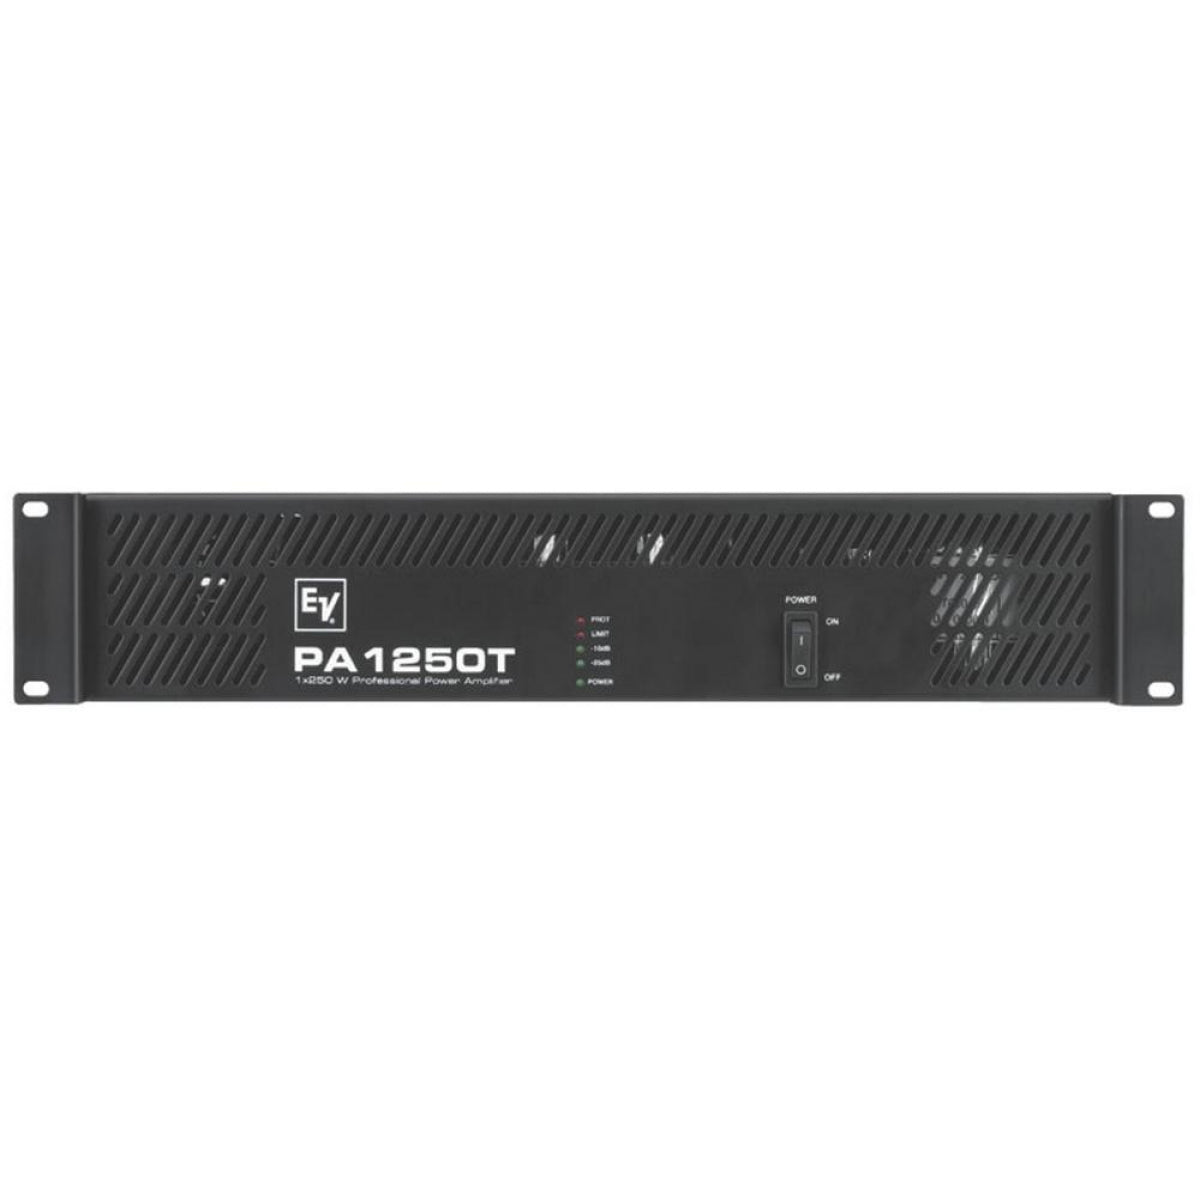 Electro-Voice PA 1250T 120V Pa Series Single-Channel 250W Power Amplifier